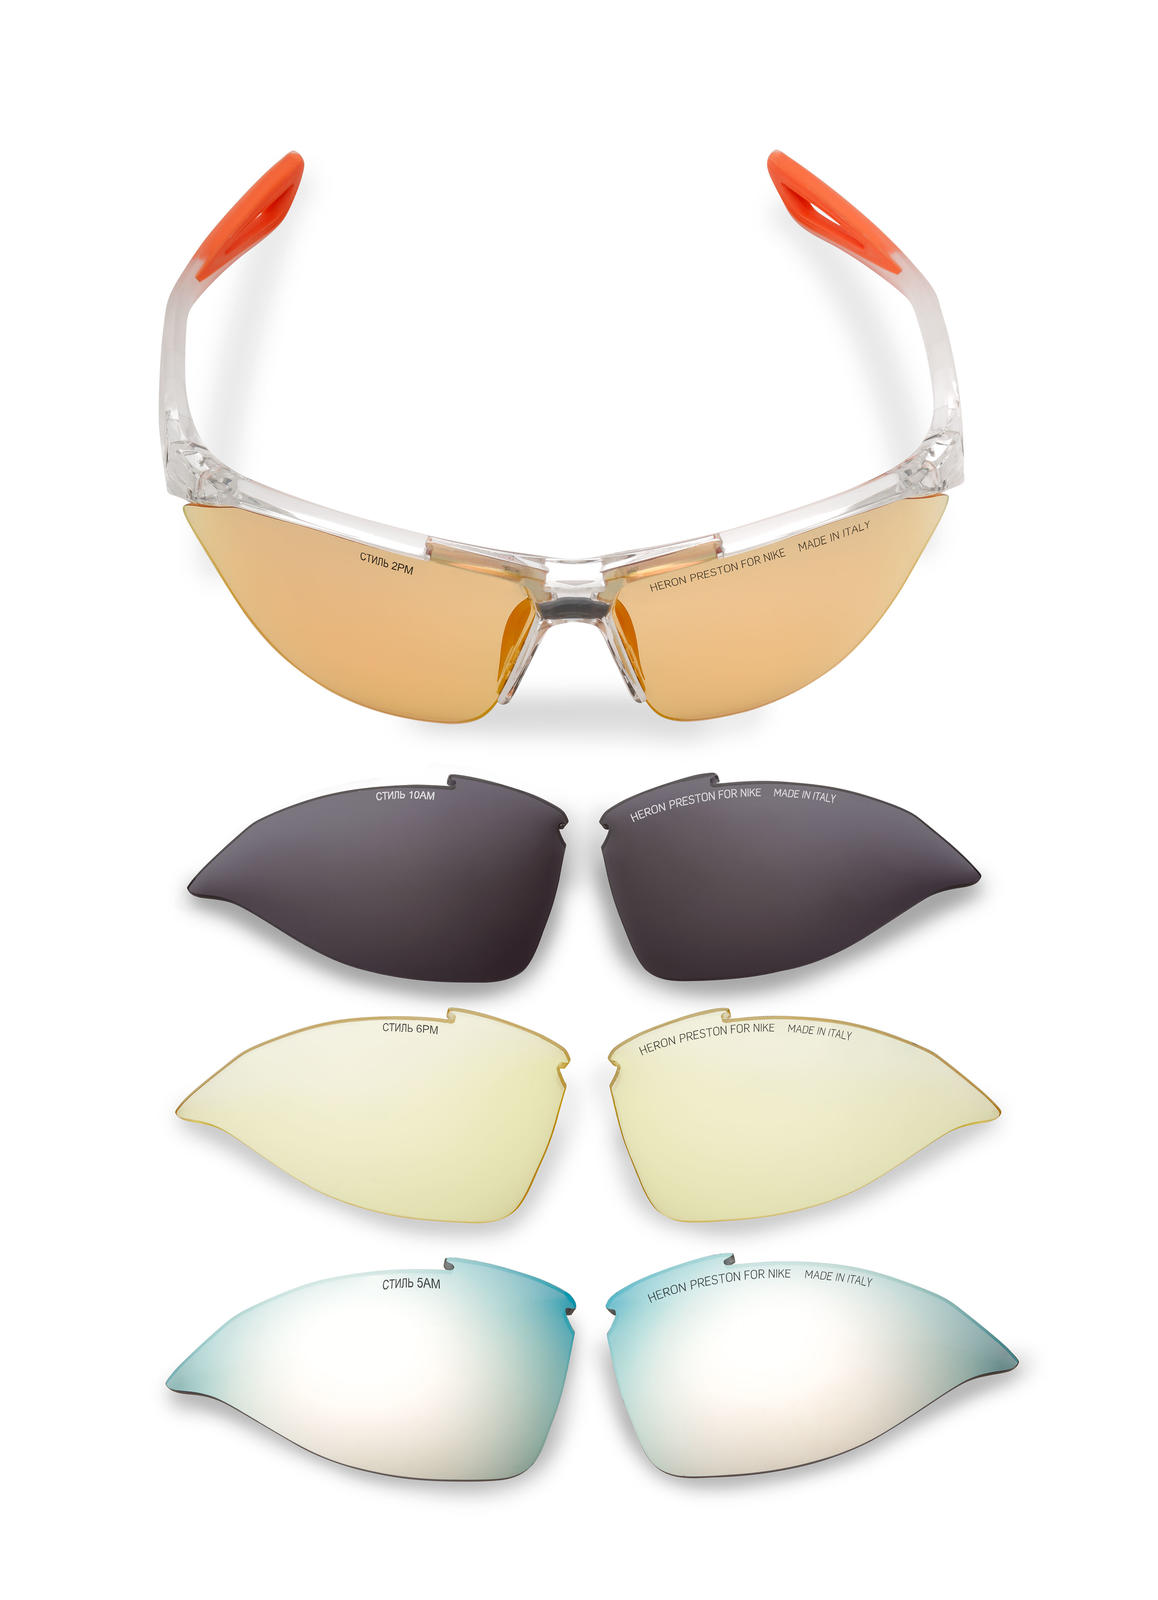 NIKE × HERON PRESTONのサングラスが11月29日に発売